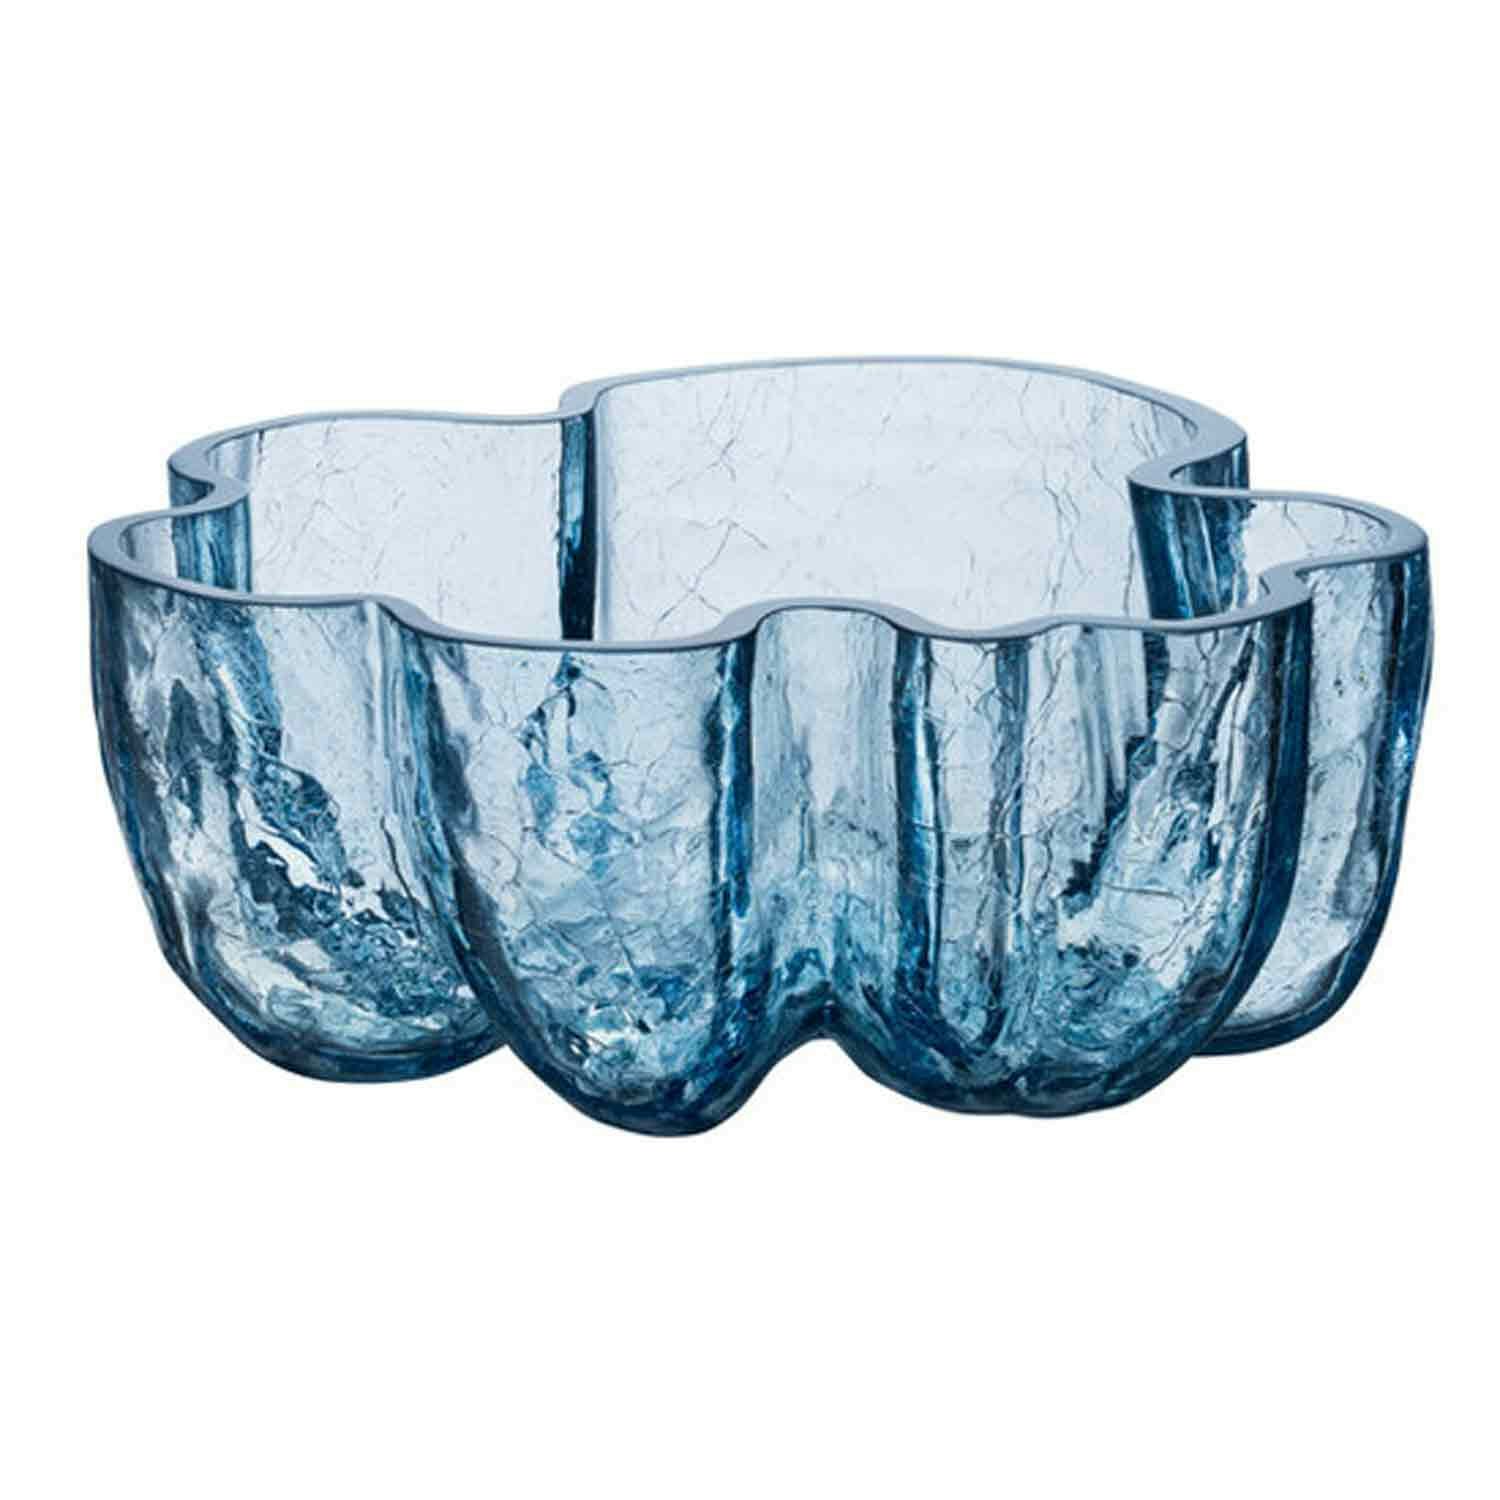 Kosta Boda Crackle Skål 10,5 cm, Sirkulært Glass Blå Munnblåst glass